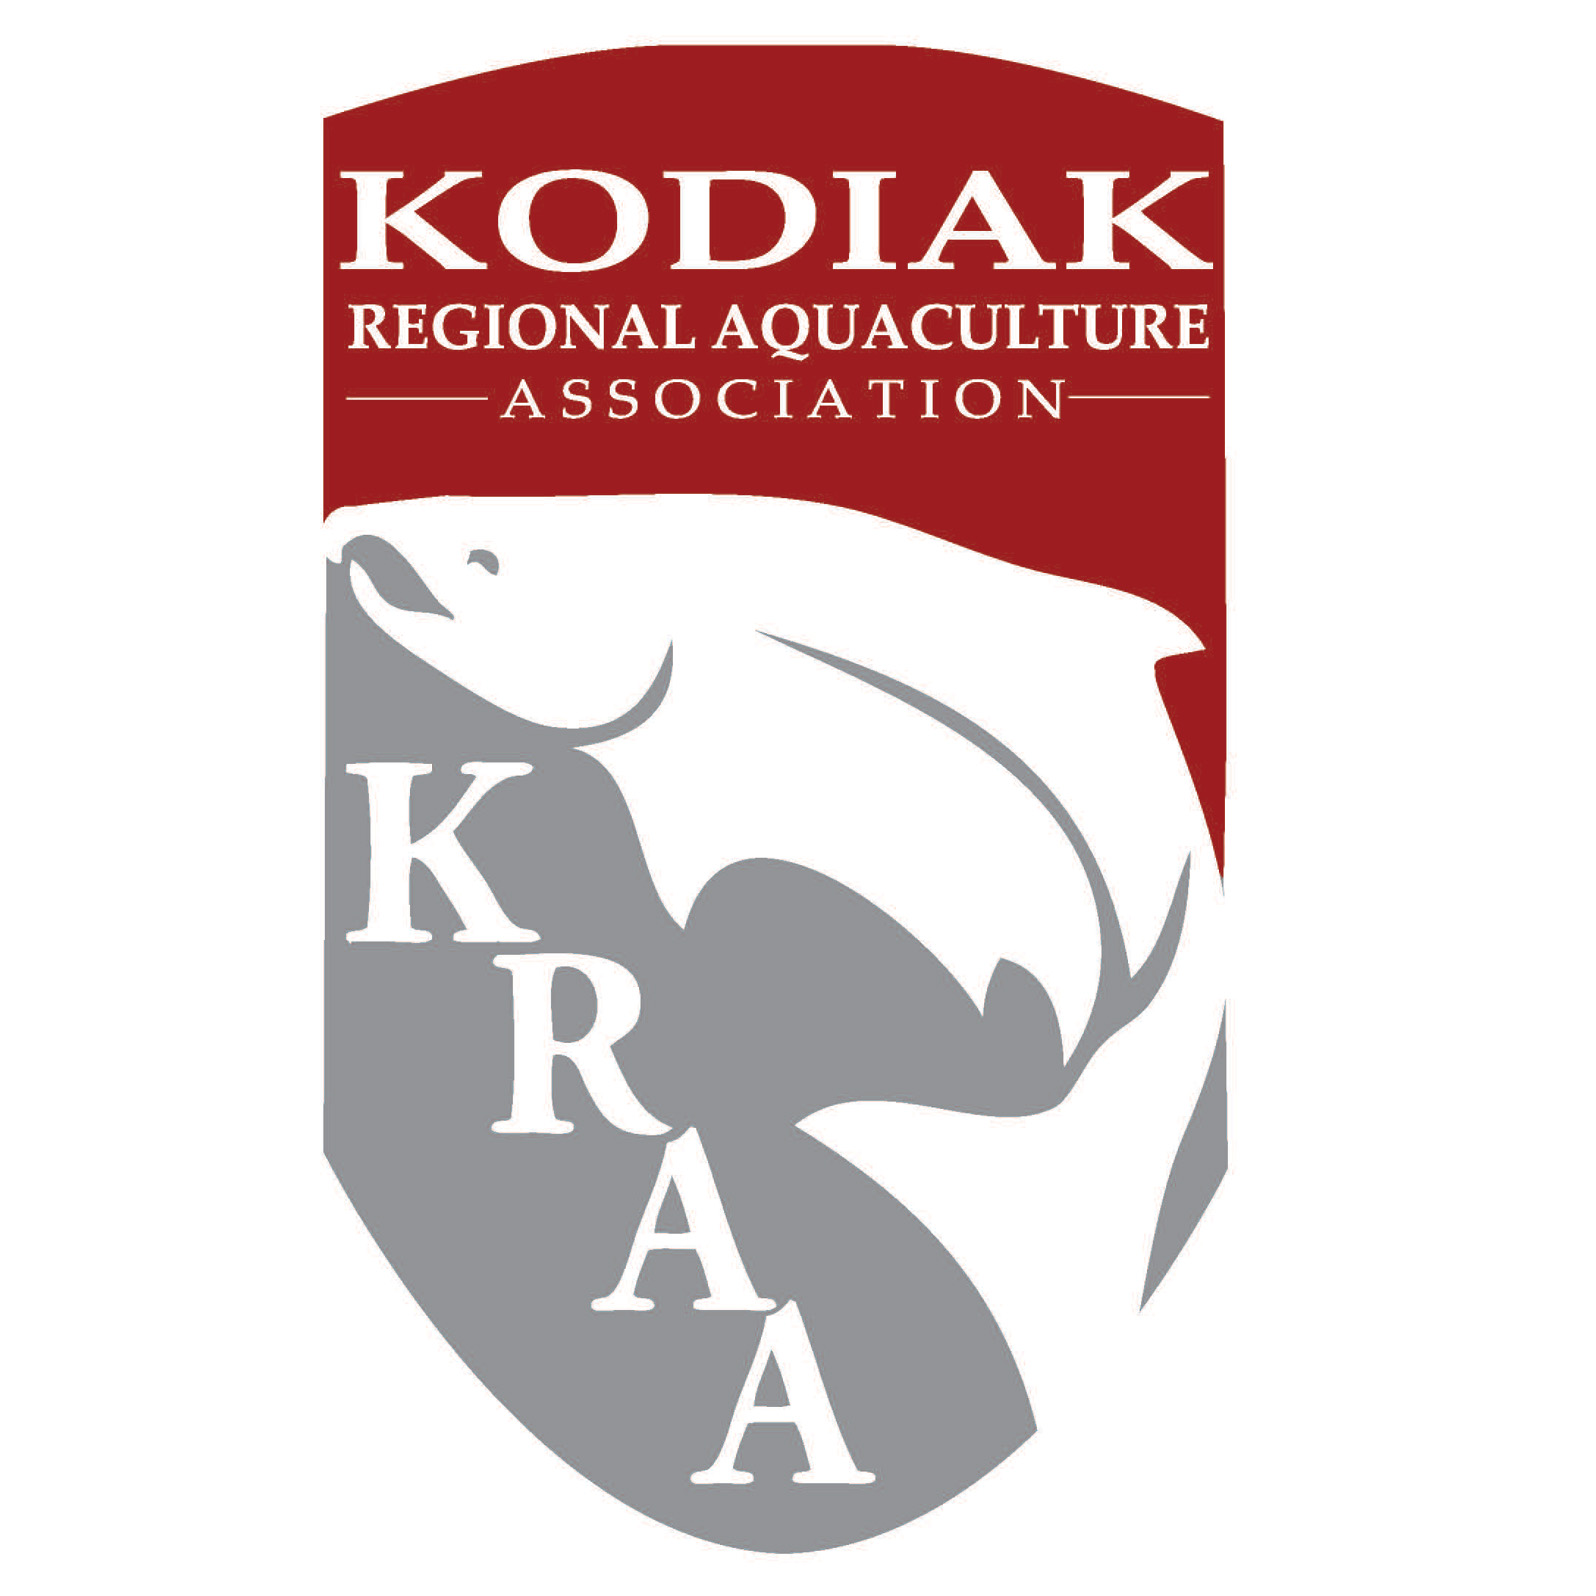 Kodiak Regional Aquaculture Association